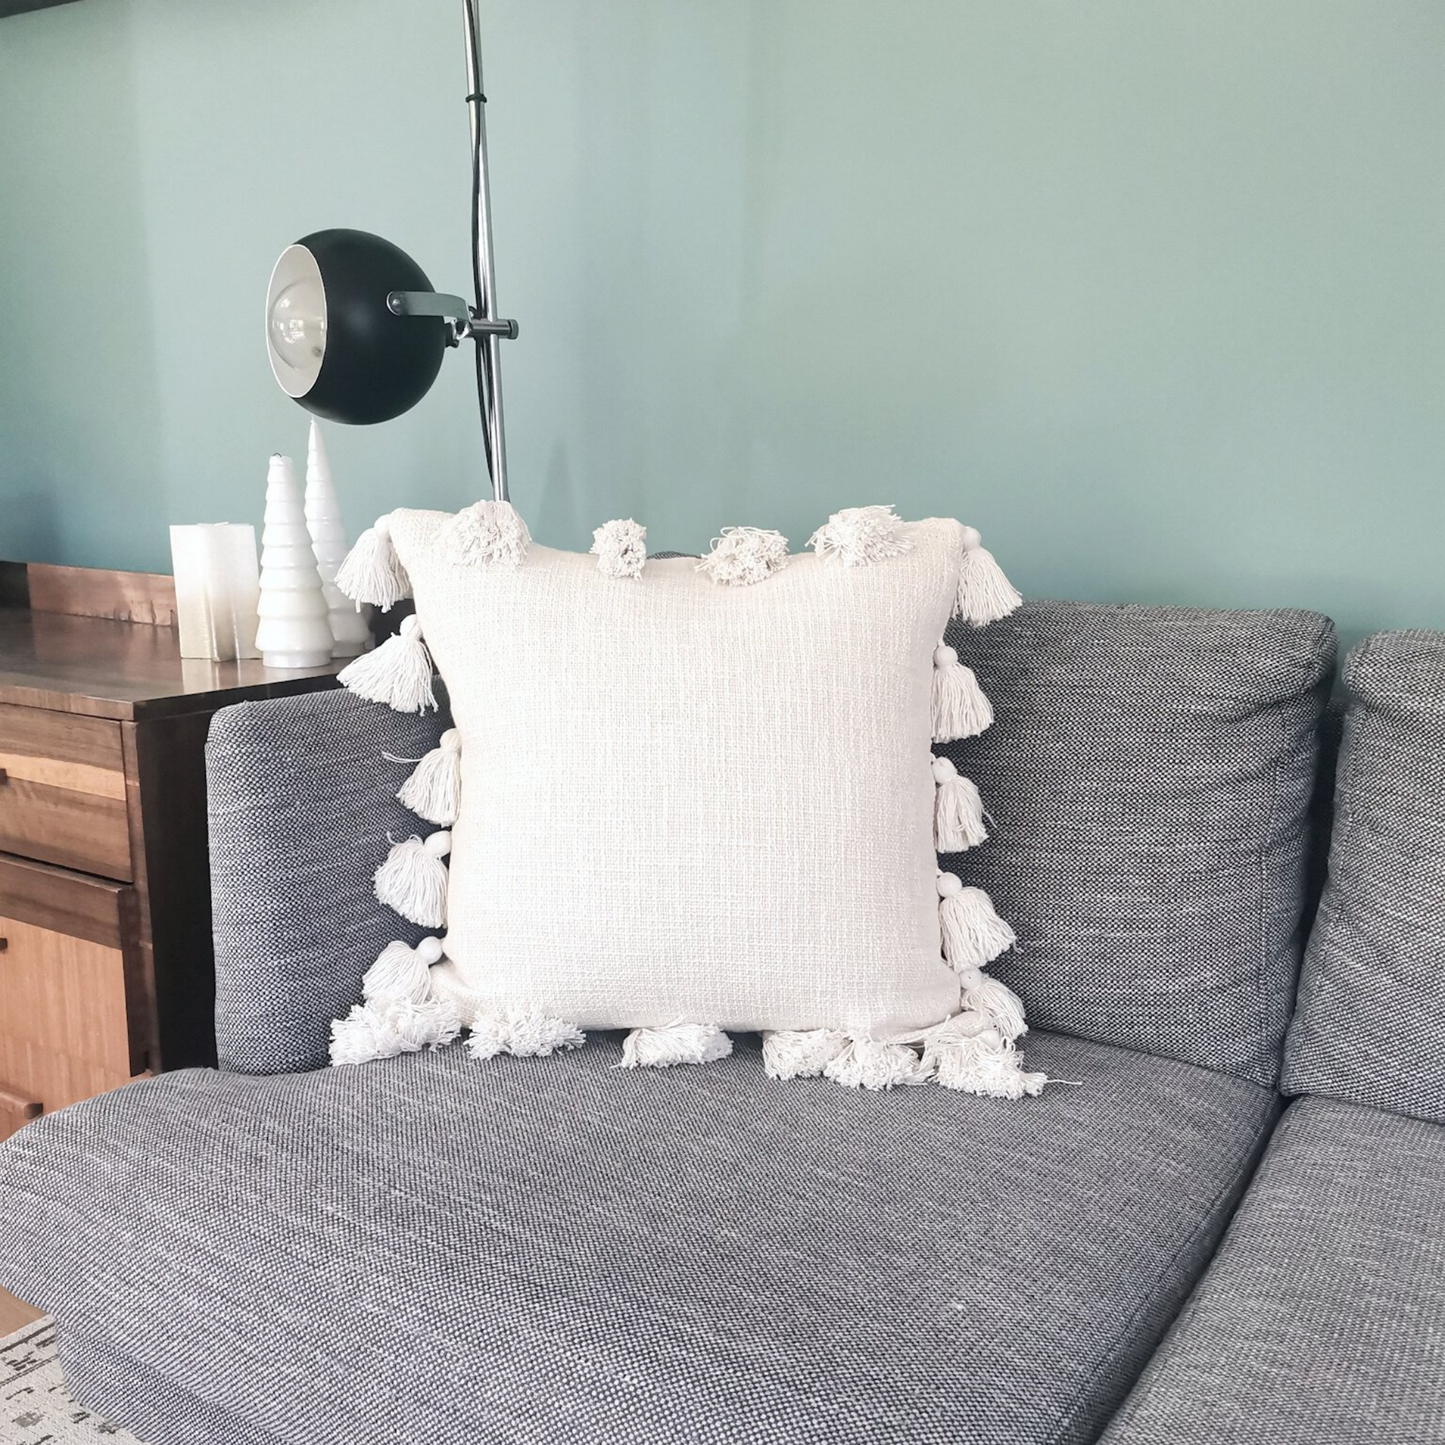 Pom poms cushion in white cream color